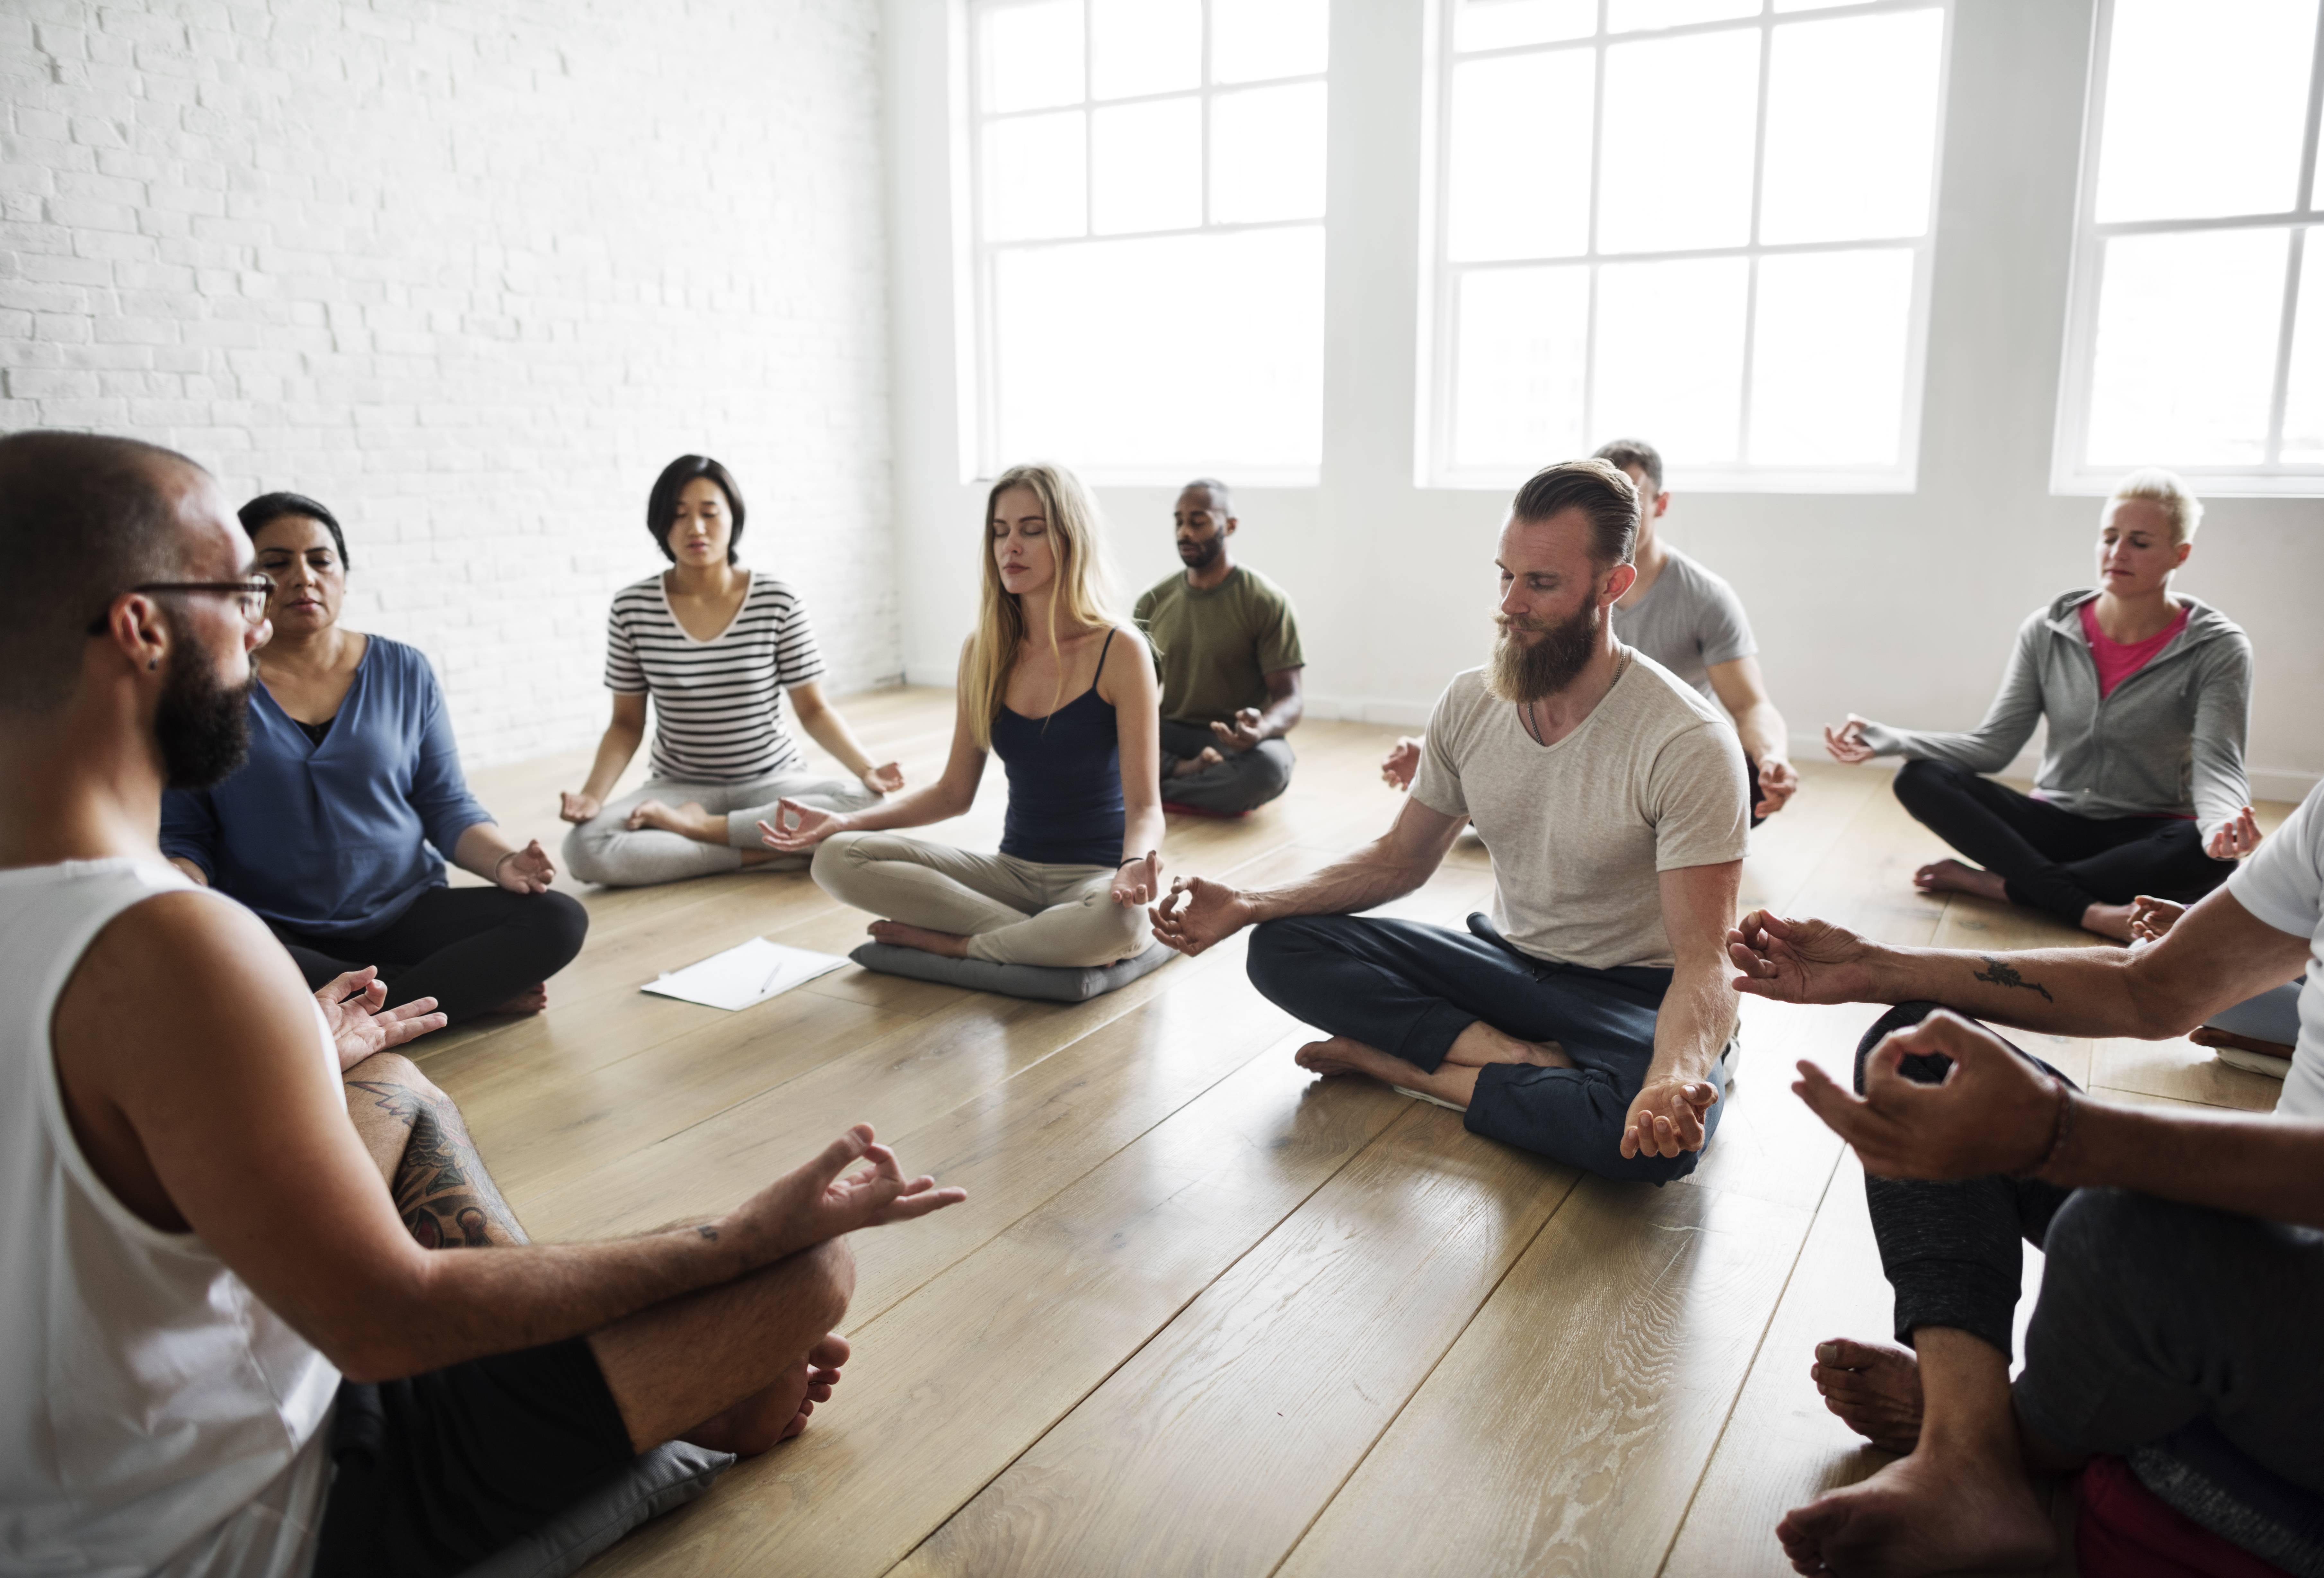 Медитация форум. Групповая медитация. Медитация группа людей. Группа людей медитируют. Коллективная медитация.